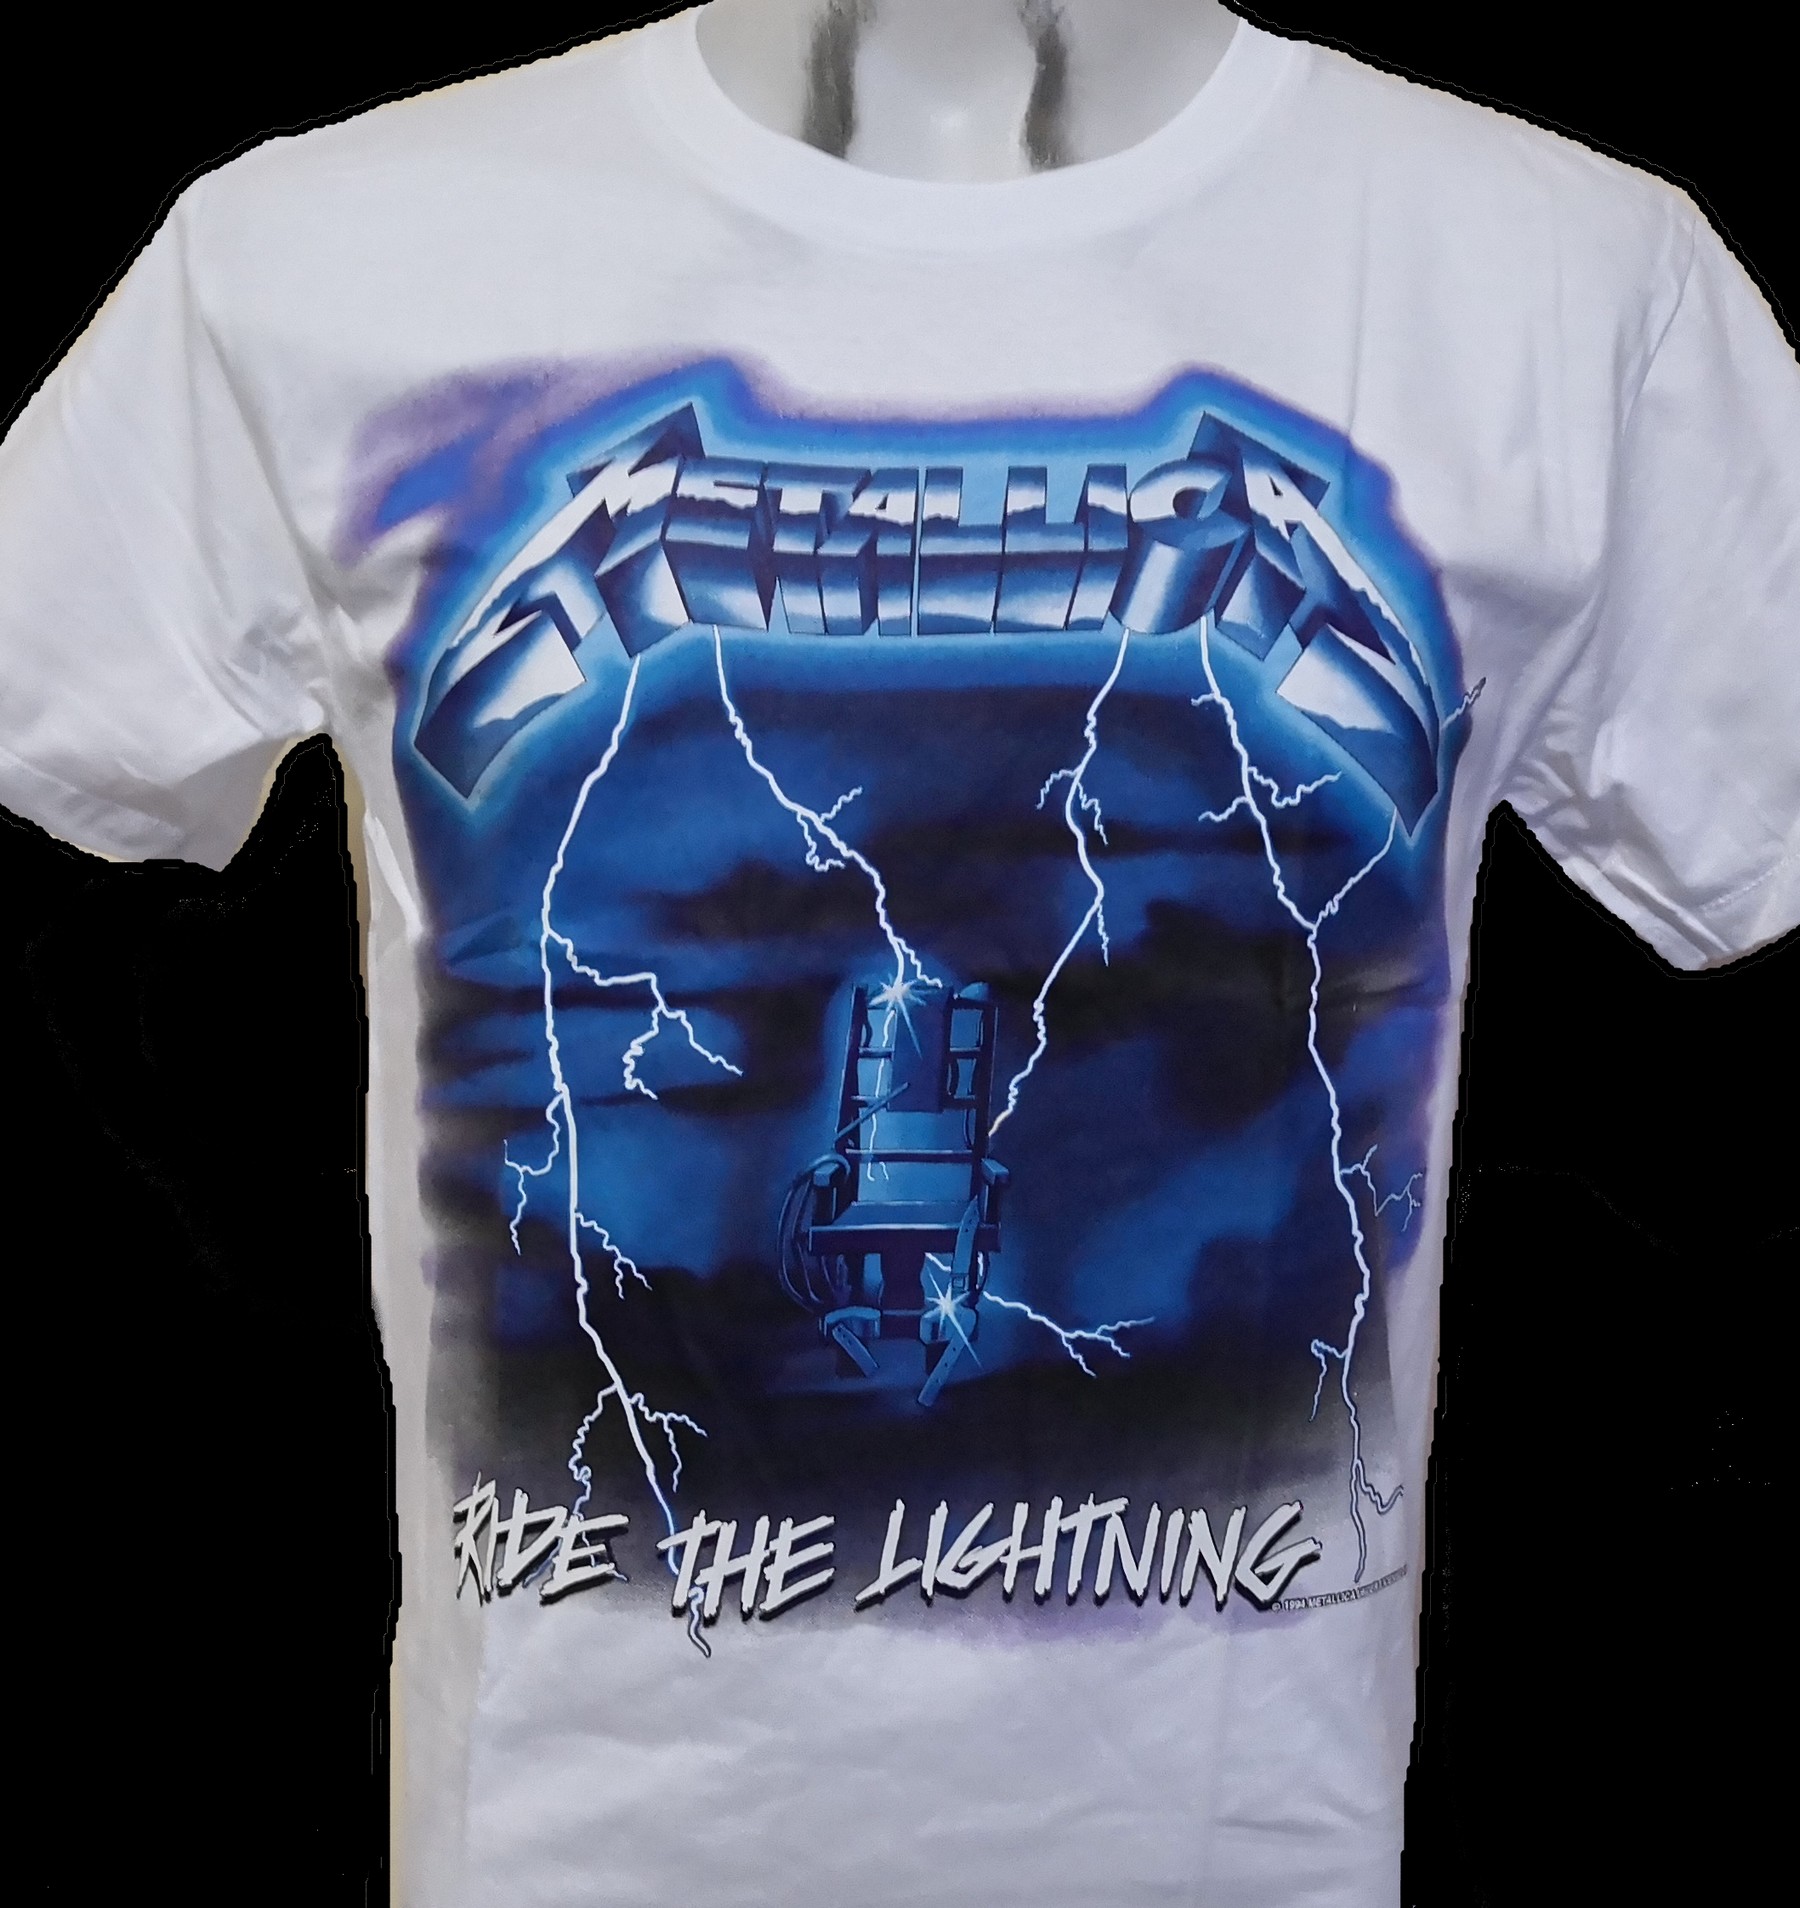 Metallica Ride The Lightning Shirt Outlet Styles, Save 41% | jlcatj.gob.mx